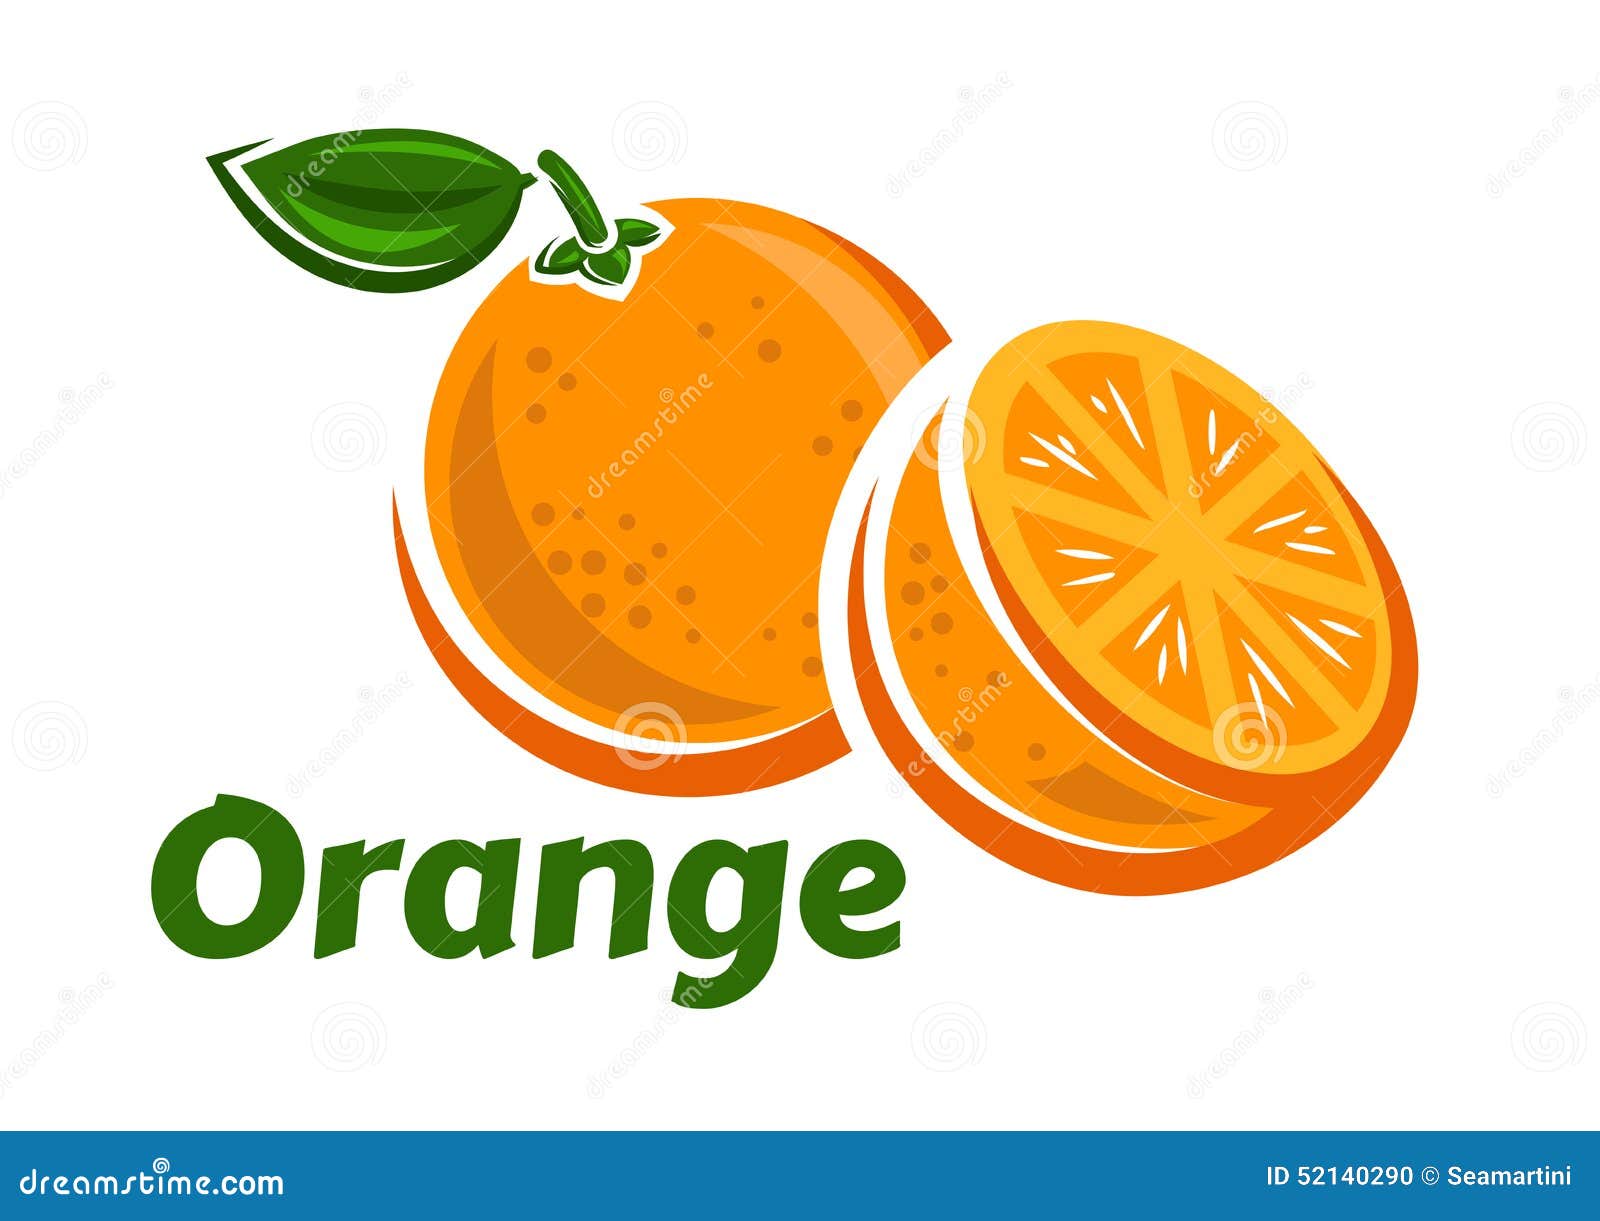 Как по английски будет апельсин. Карточка апельсин. Надпись апельсин. Апельсин карточка для детей. Апельсин на английском.